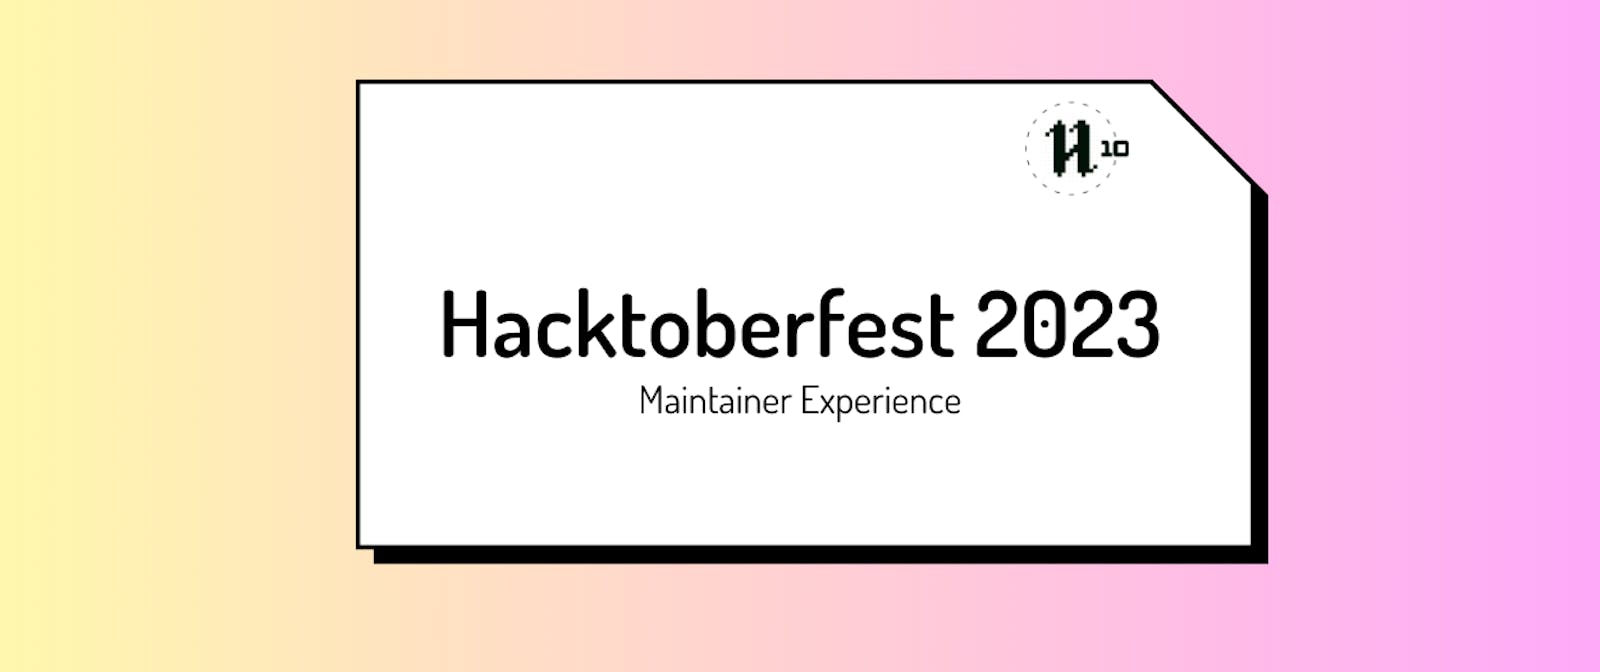 Hacktoberfest Maintainer Experience